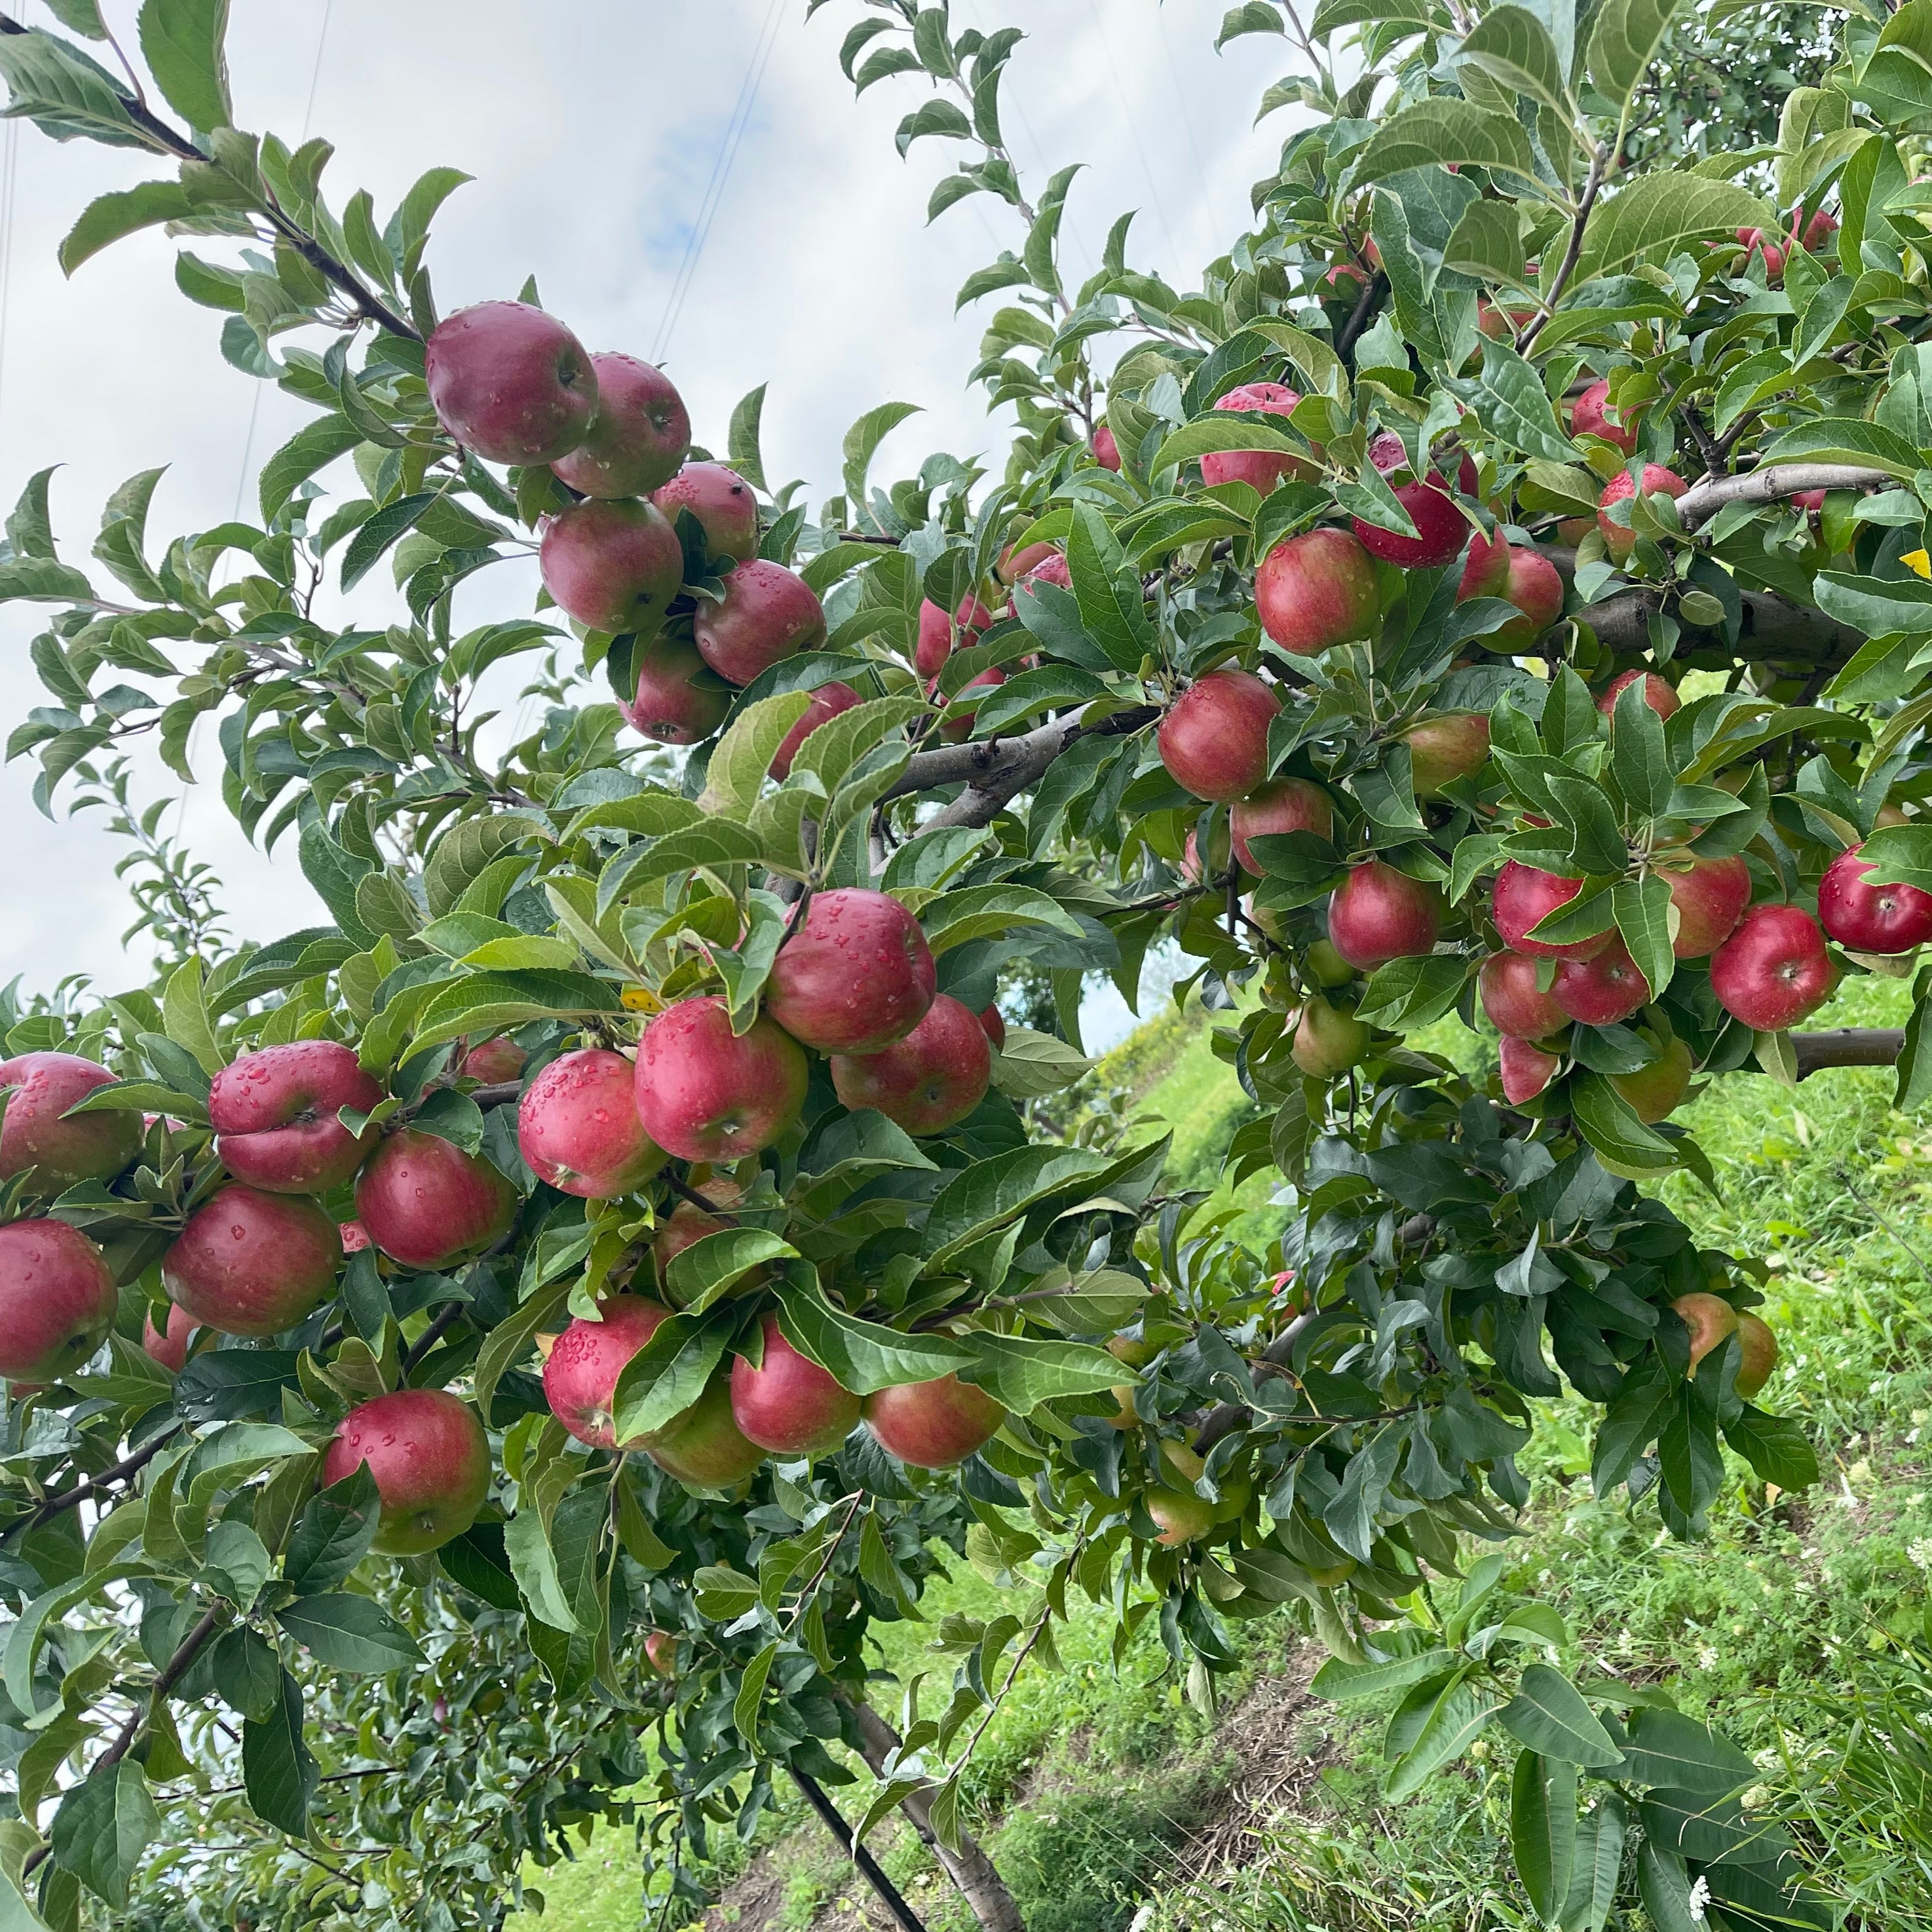 prima apples on the tree